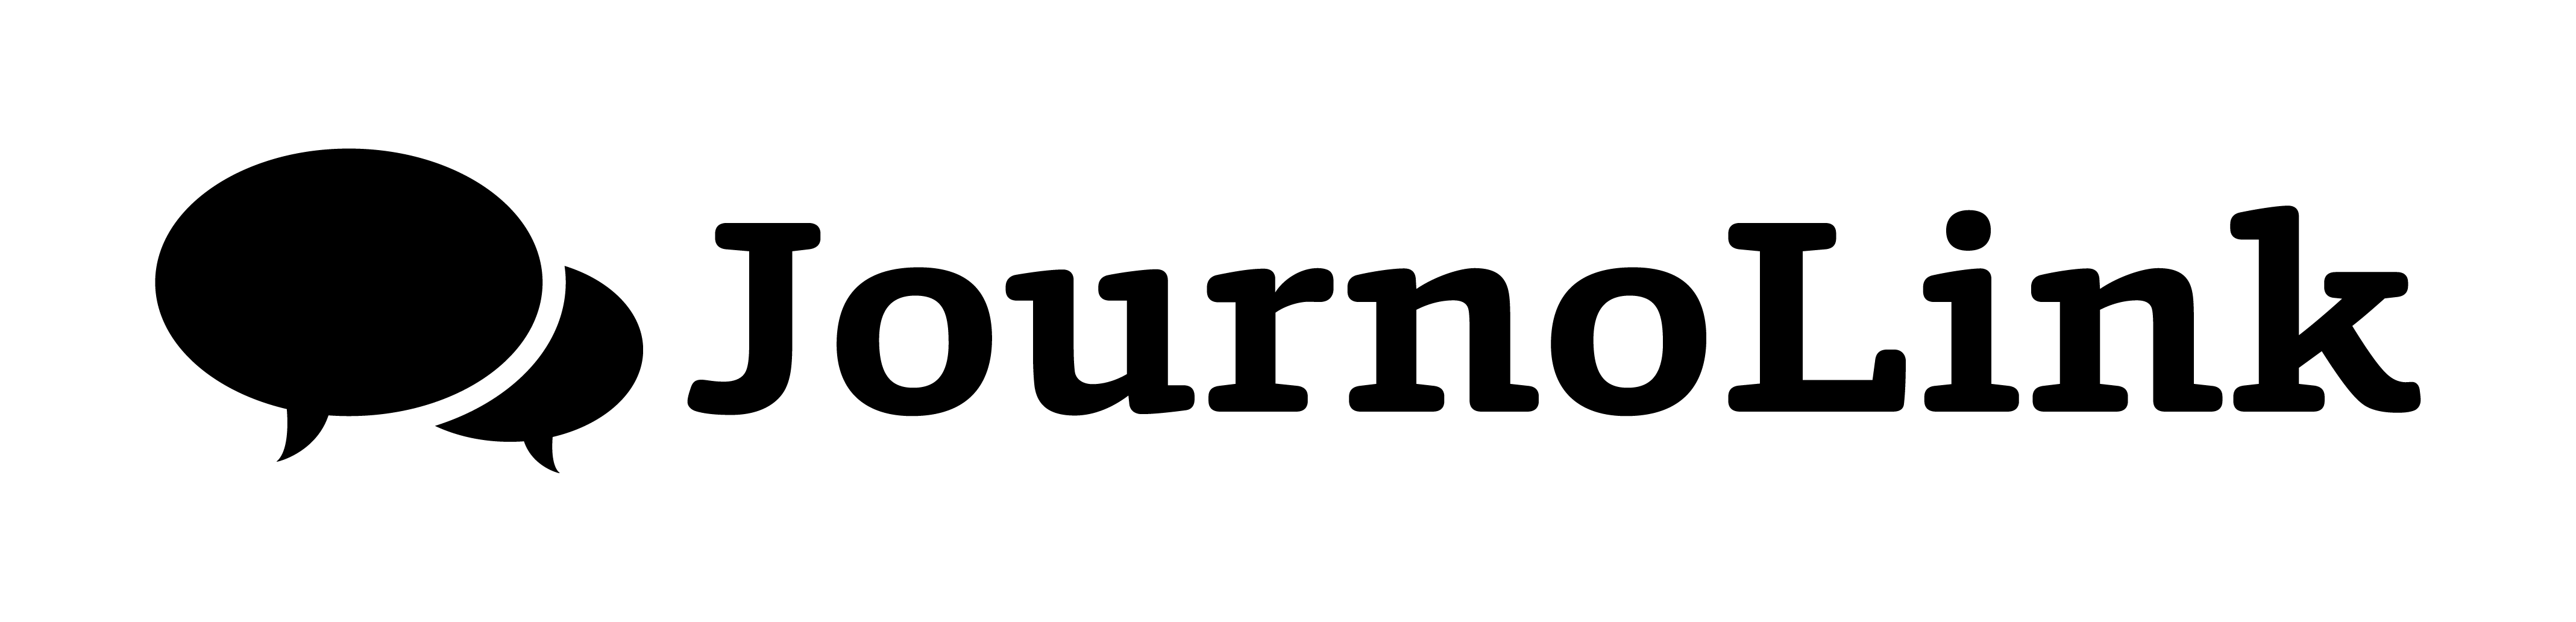 Image of Journolink logo